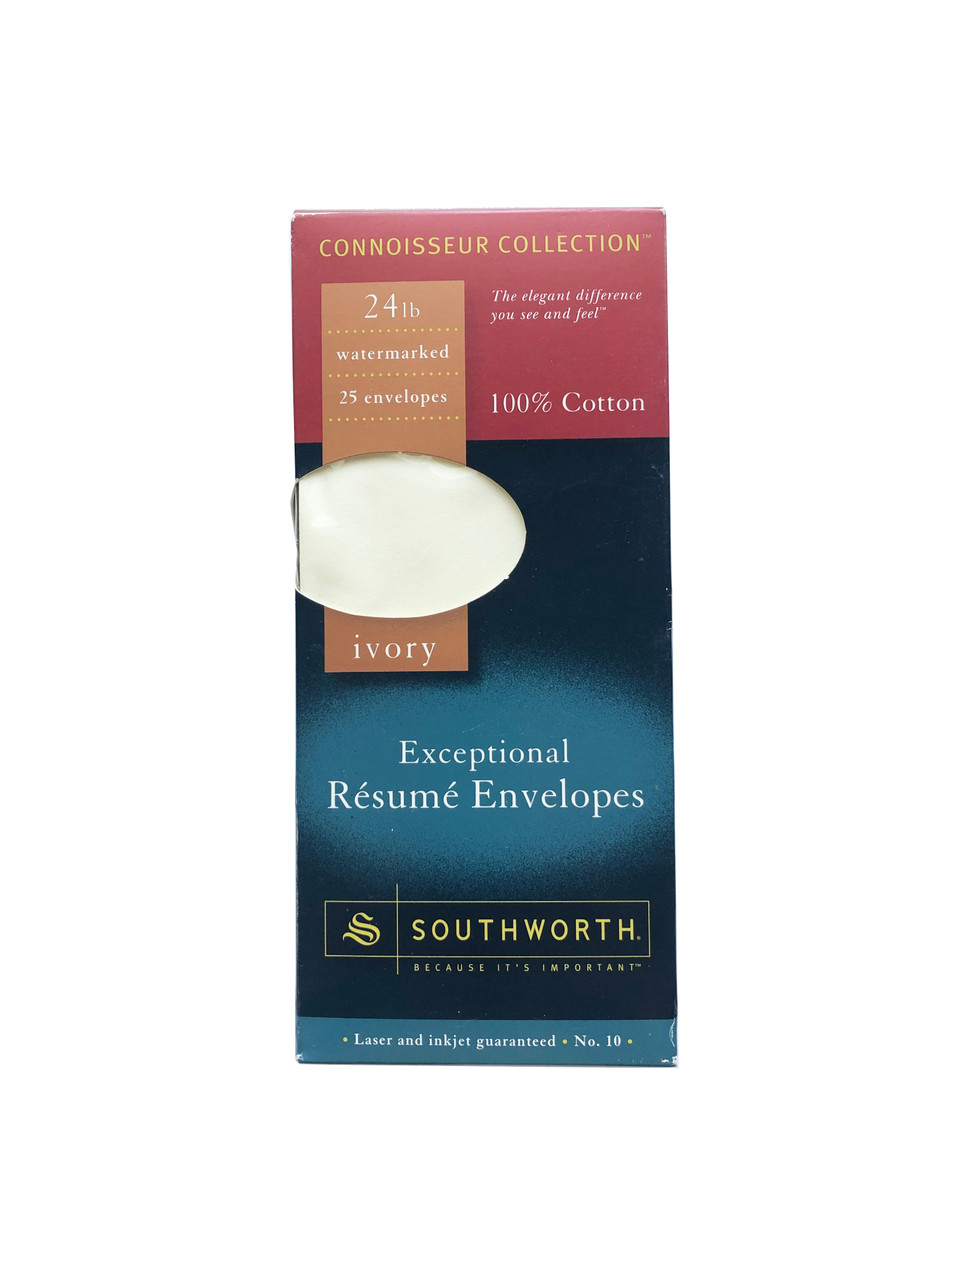 Southworth Connoisseur Collection 100% Cotton Ivory Exceptional